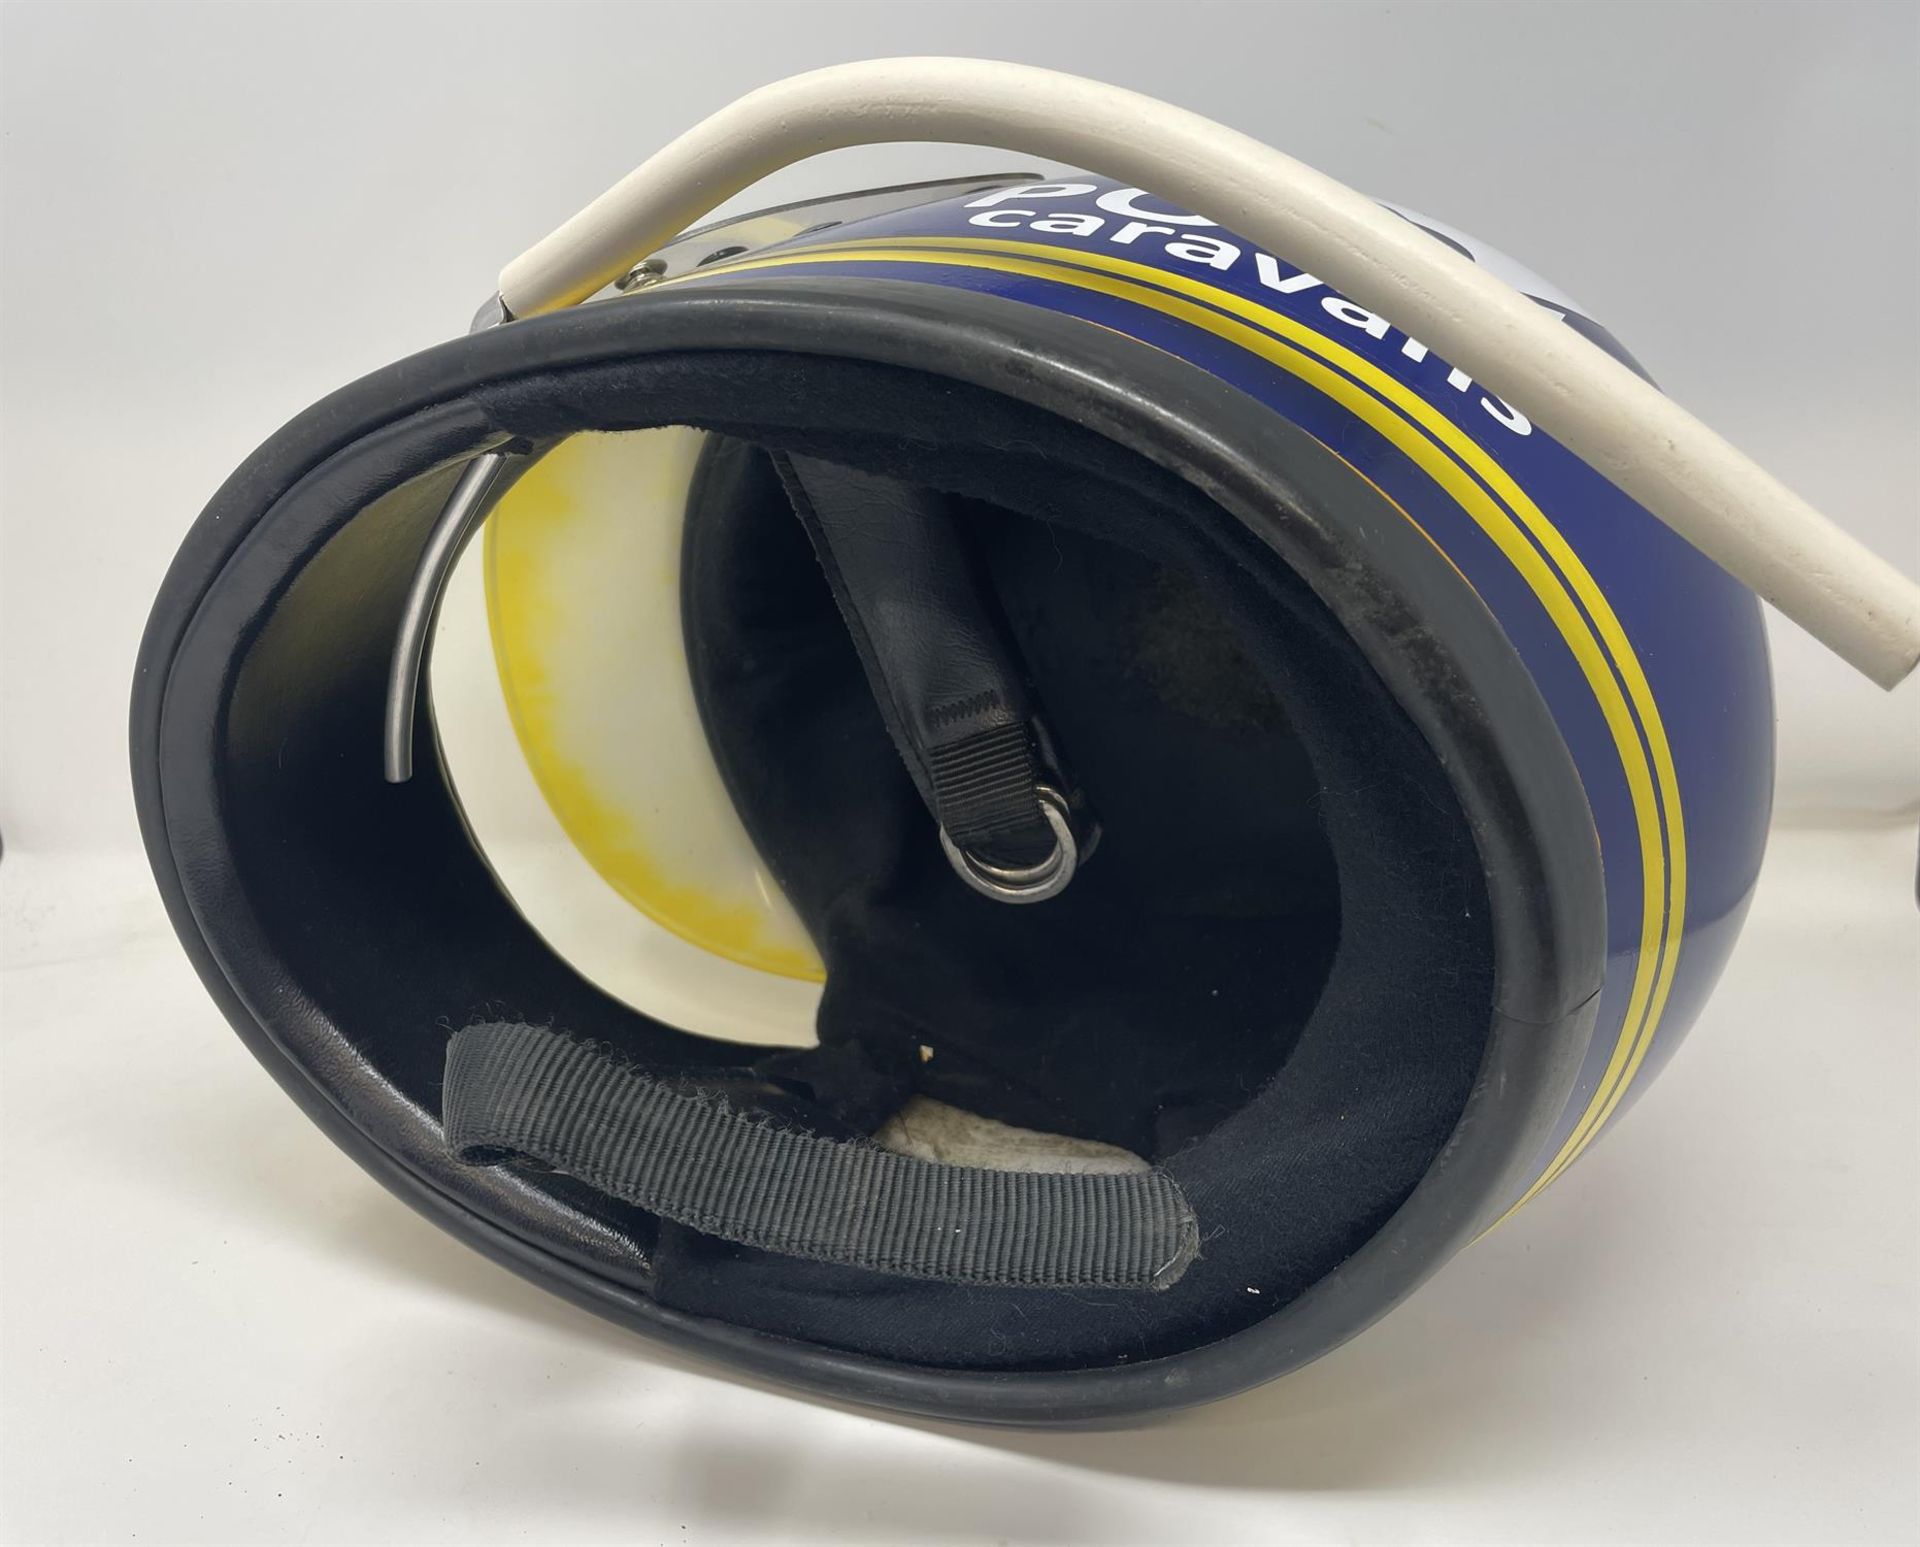 Replica Ronnie Peterson Bell Racestar 2 Helmet - Image 7 of 10